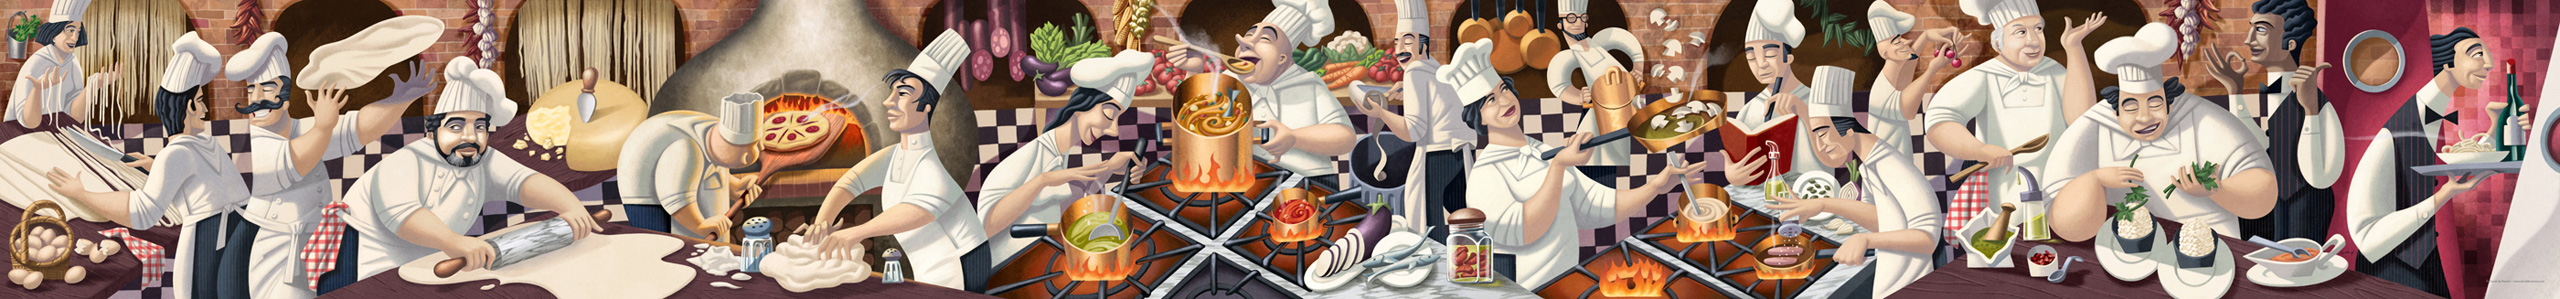 www.davidderamon.com - illustration - da nicola ristorante